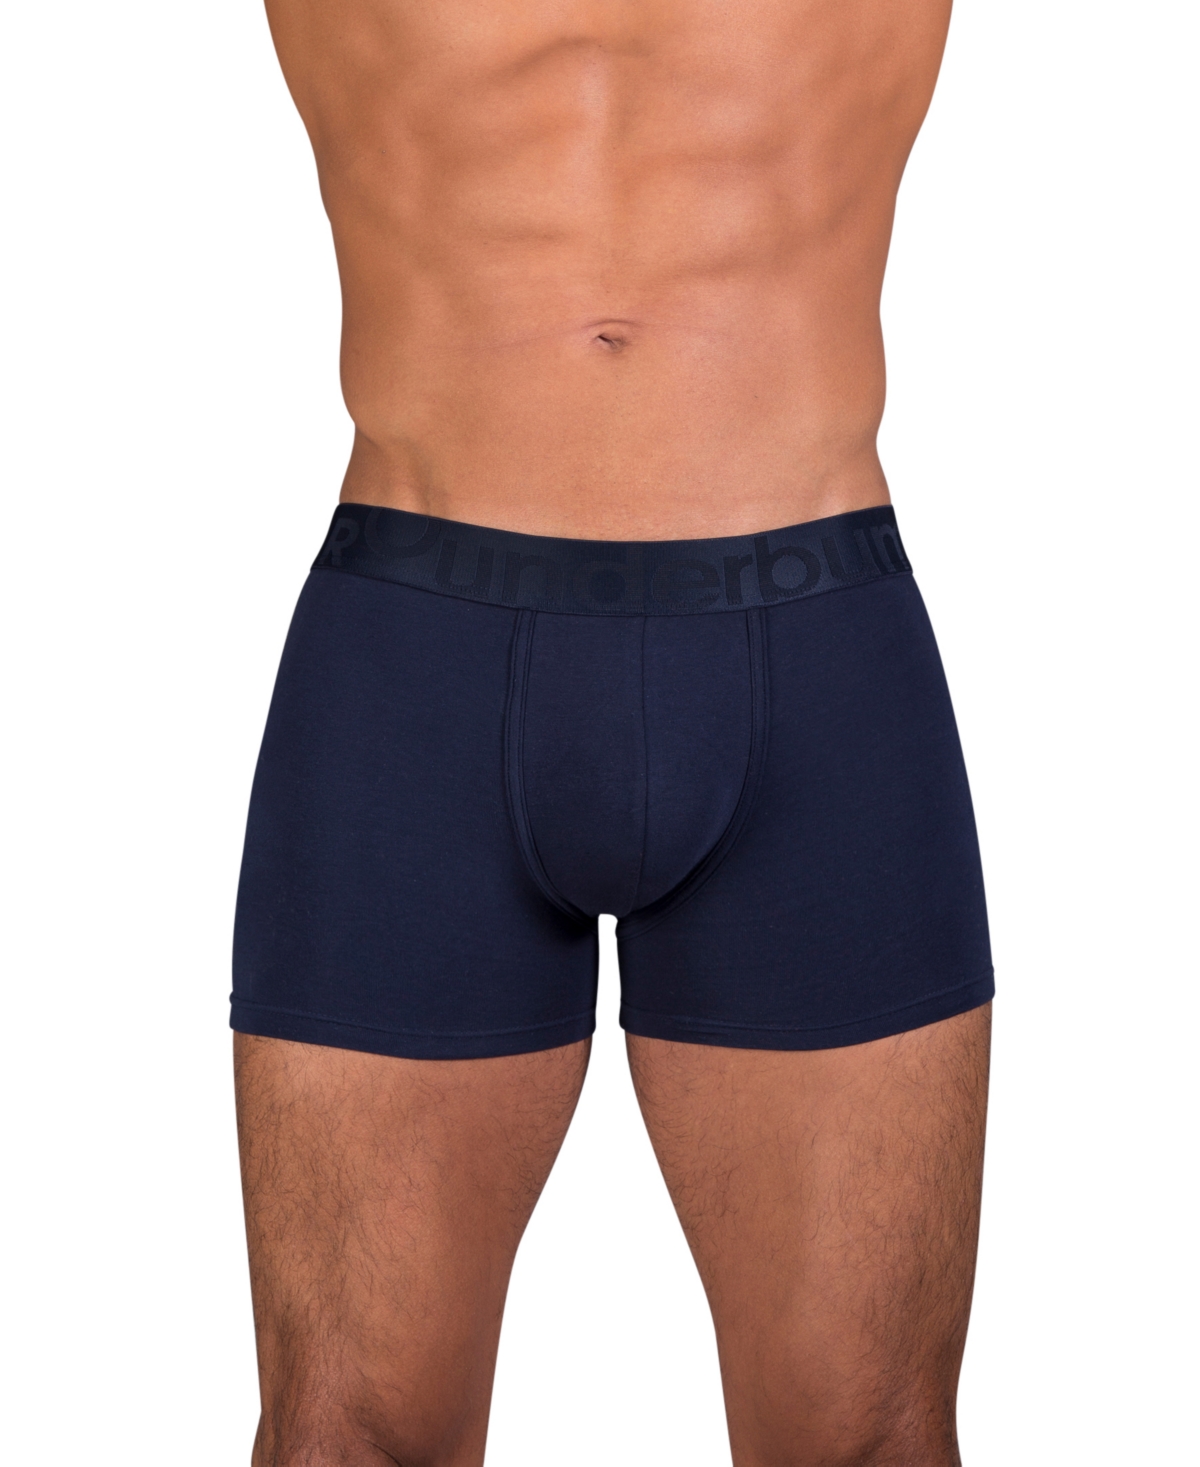 Rounderbum Padded Boxer Brief Underwear Smart Closet 2674